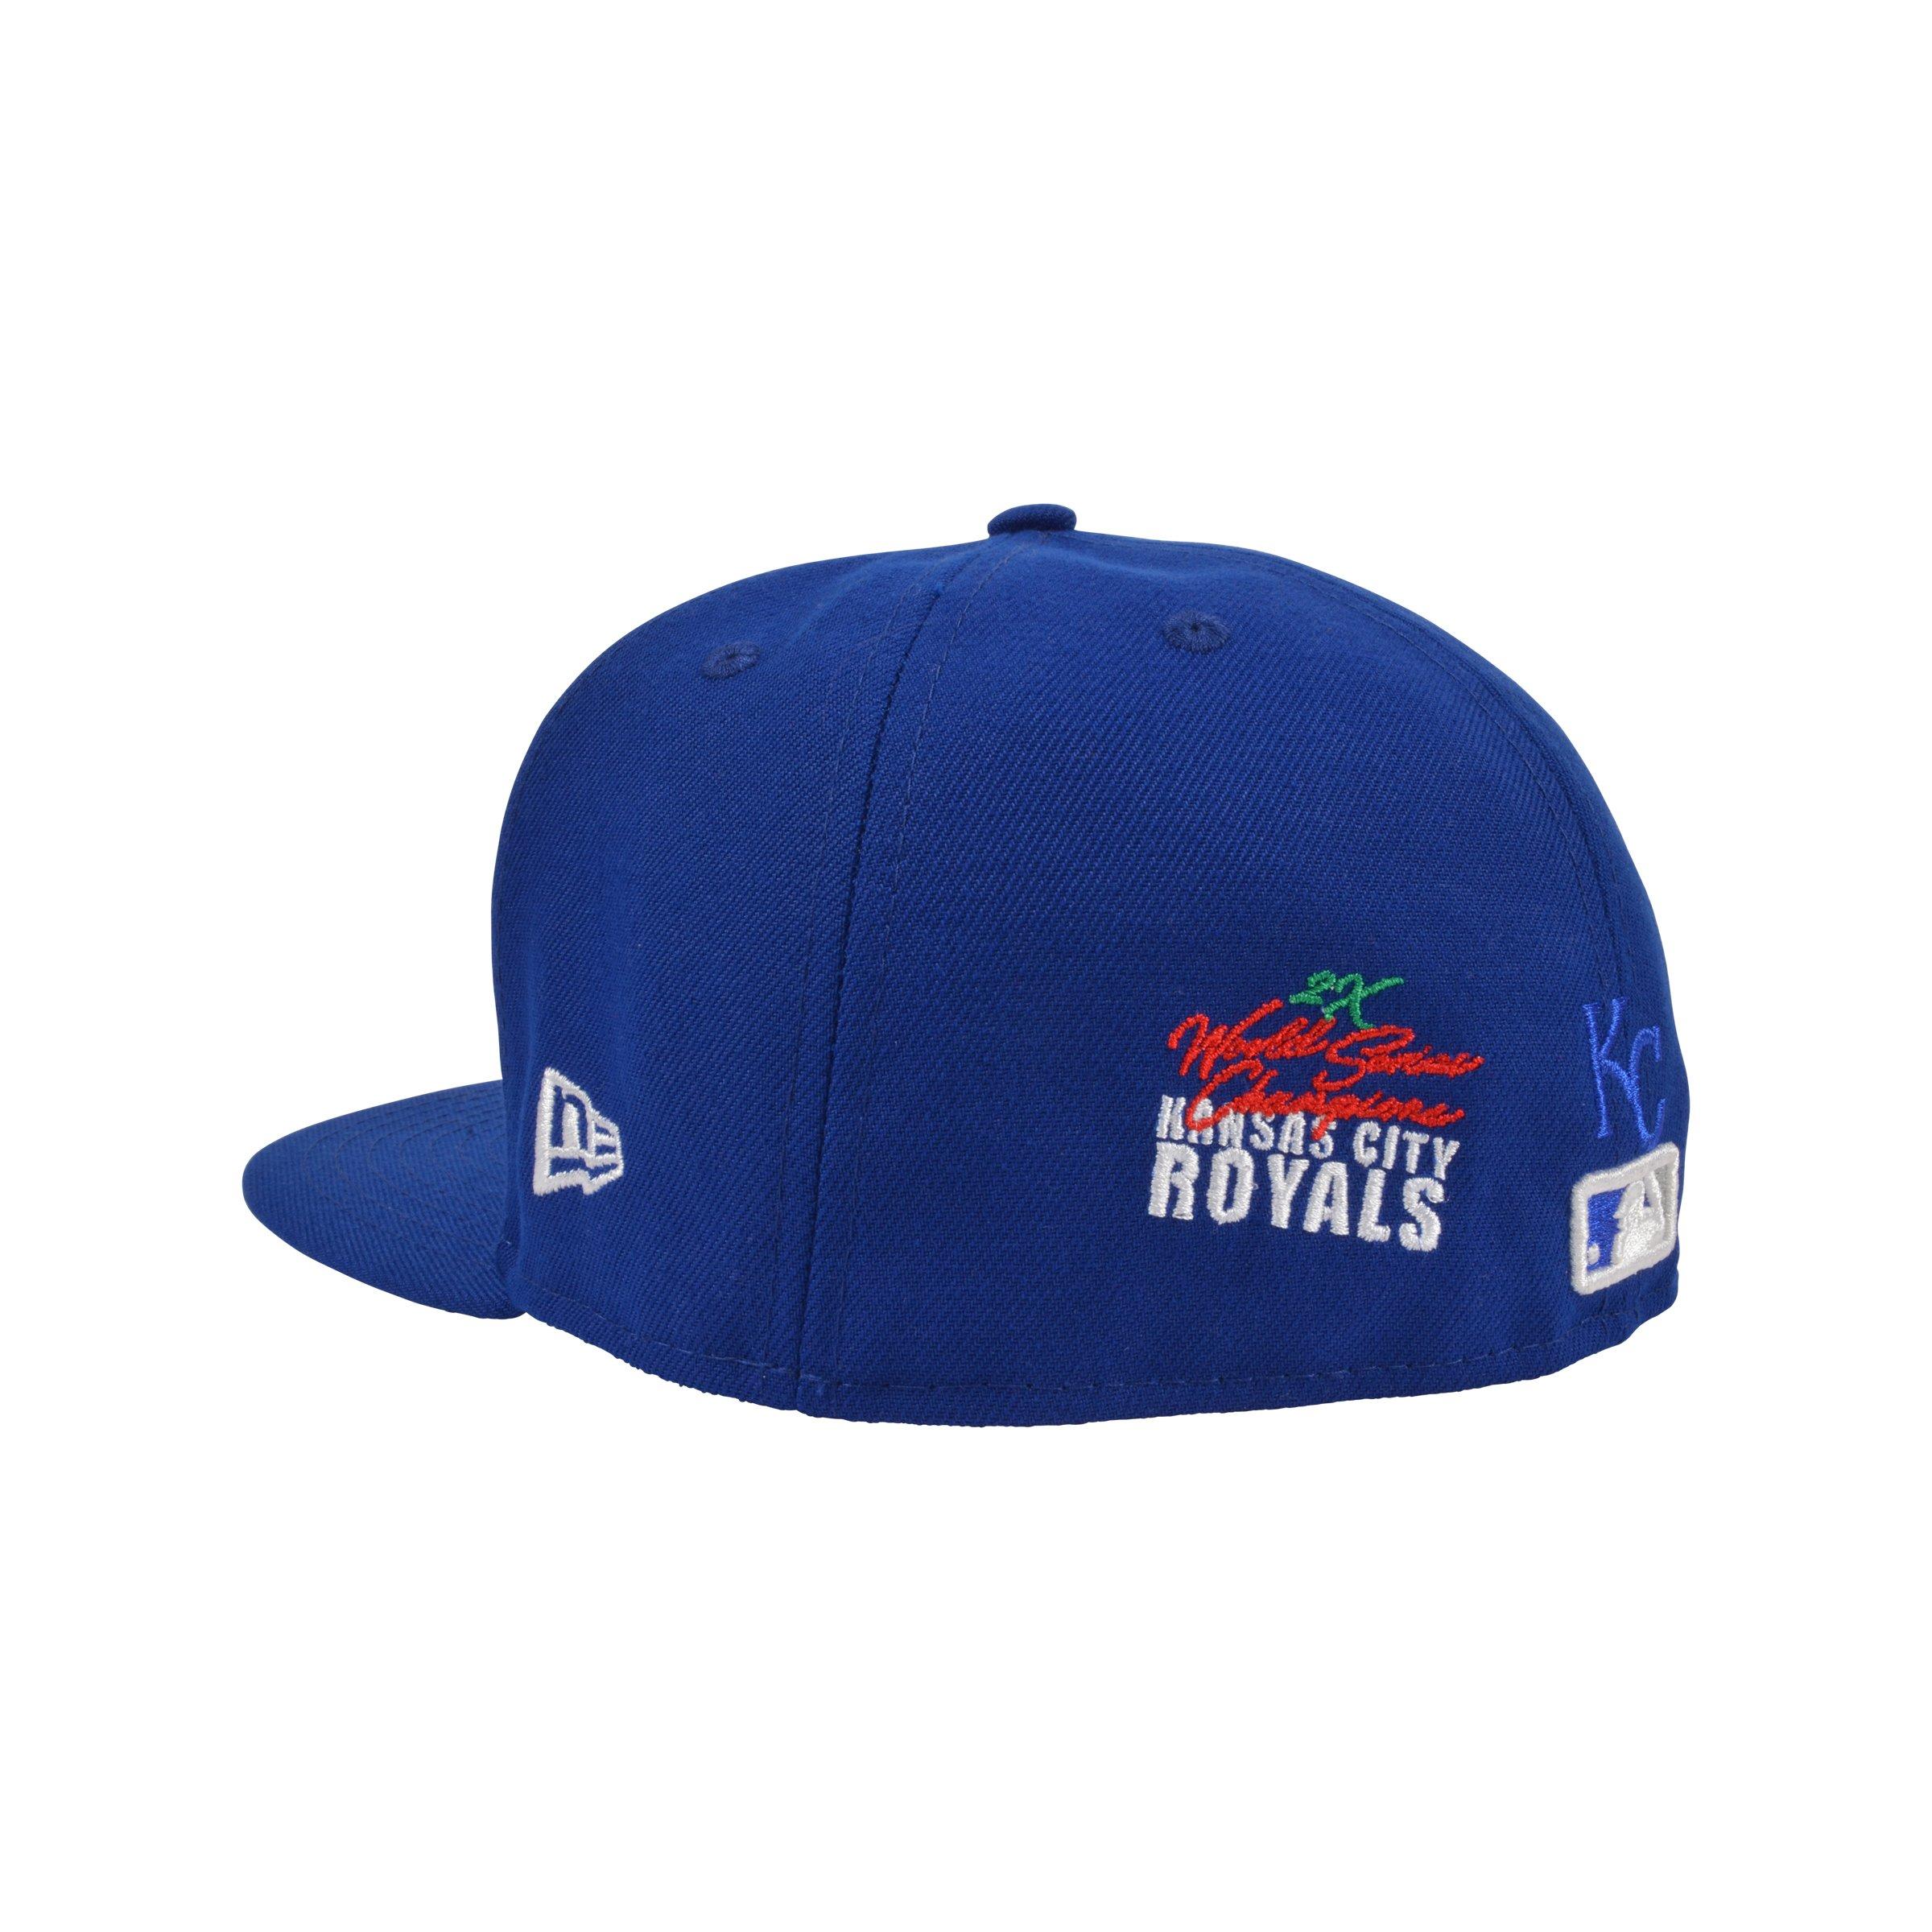 Kansas City Royals MLB Champions New Era Fitted Hat Size 6 7/8